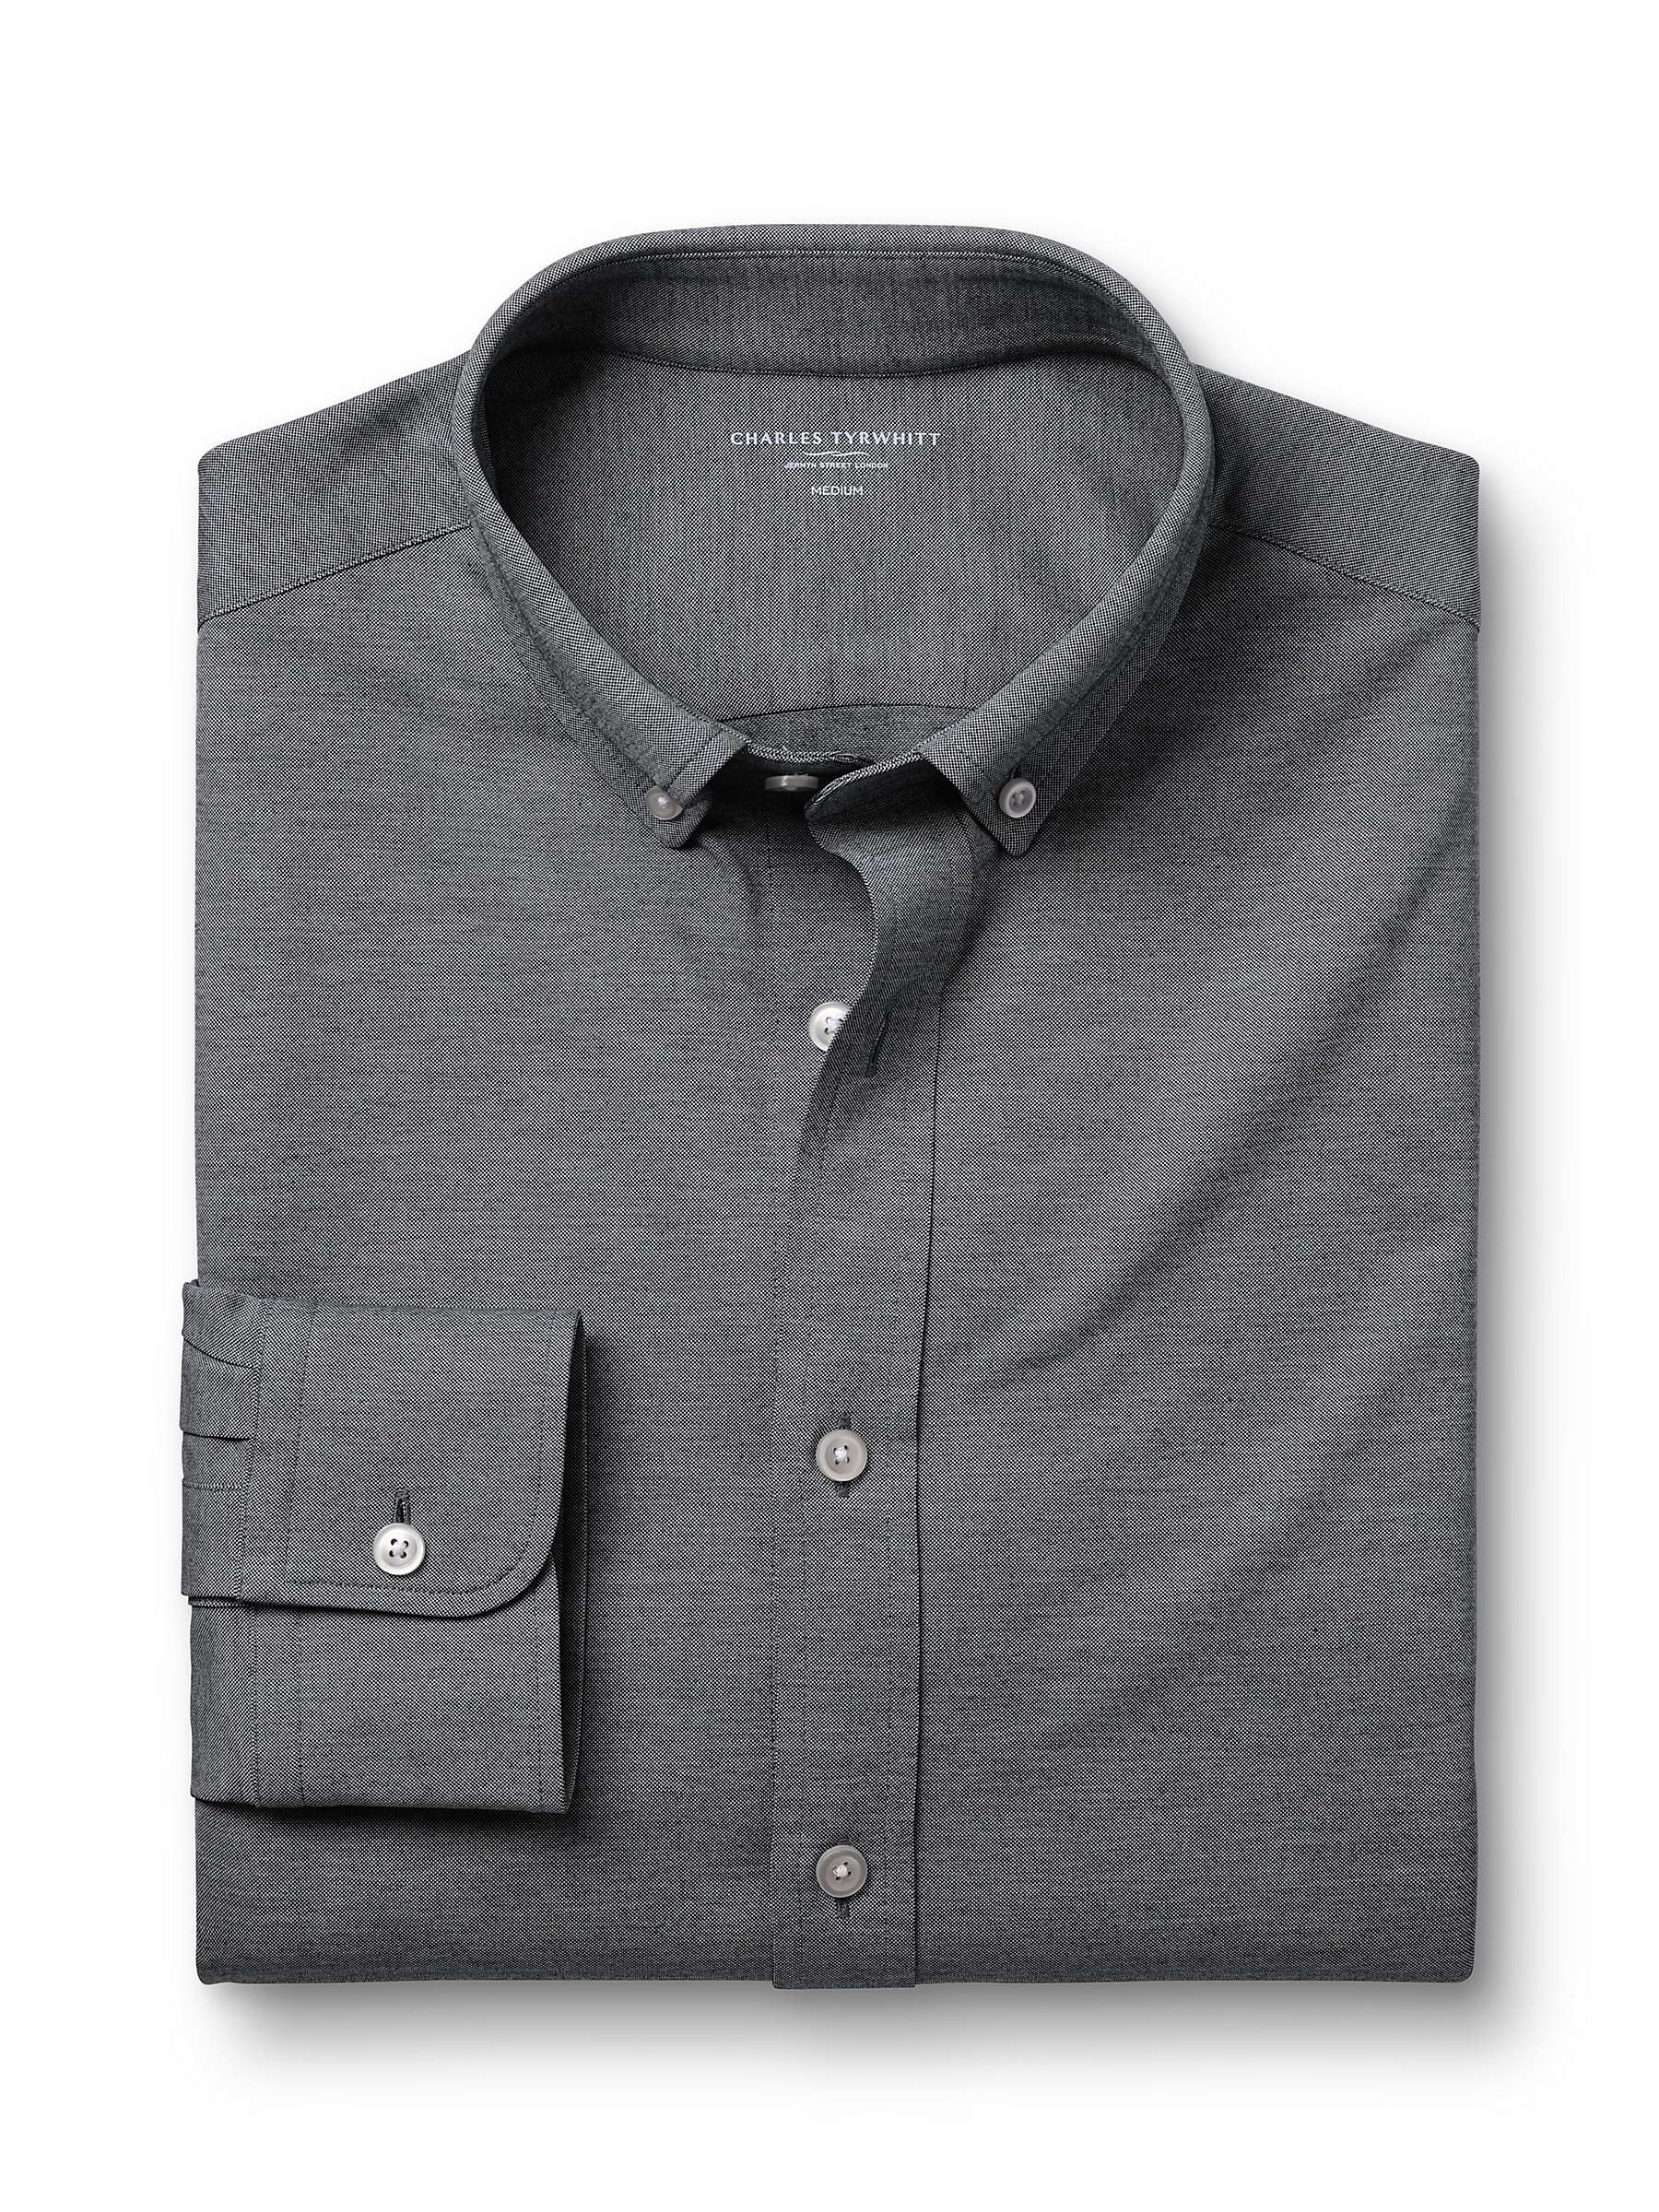 Buy Charles Tyrwhitt Four-Way Stretch Jersey Shirt Online at johnlewis.com